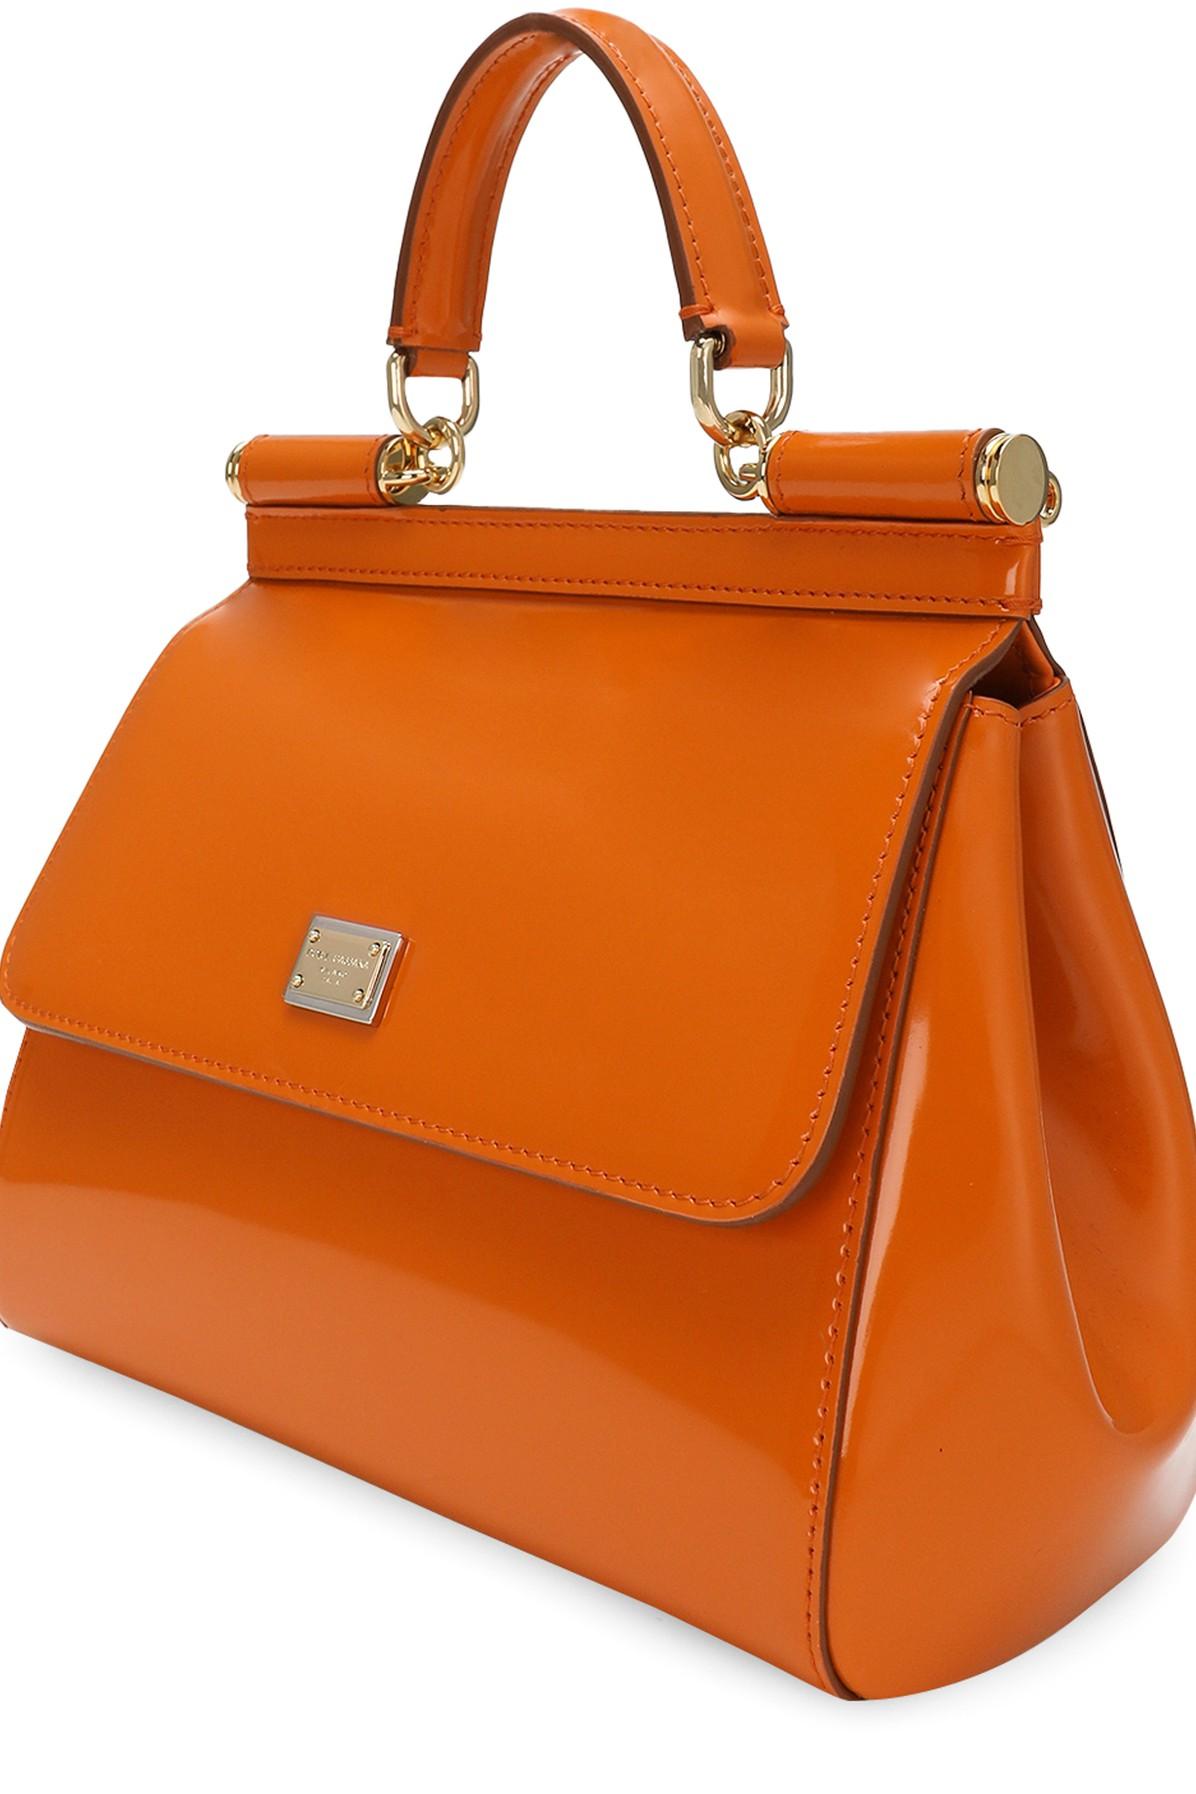 Dolce & Gabbana Small Sicily Handbag in Orange